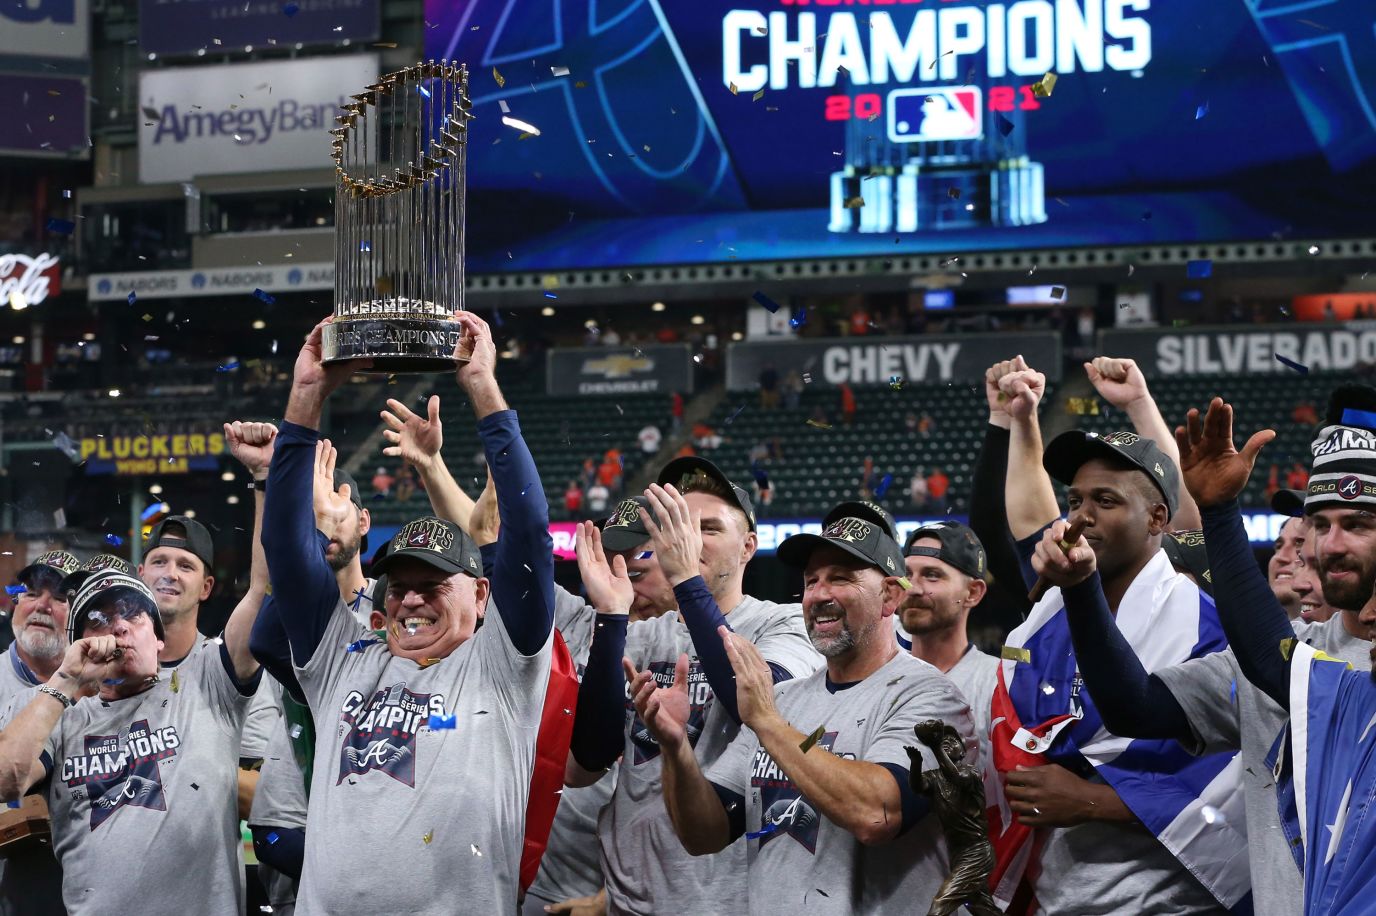 Atlanta Braves Unsigned 2021 MLB World Series Champions Team Dogpile Photograph